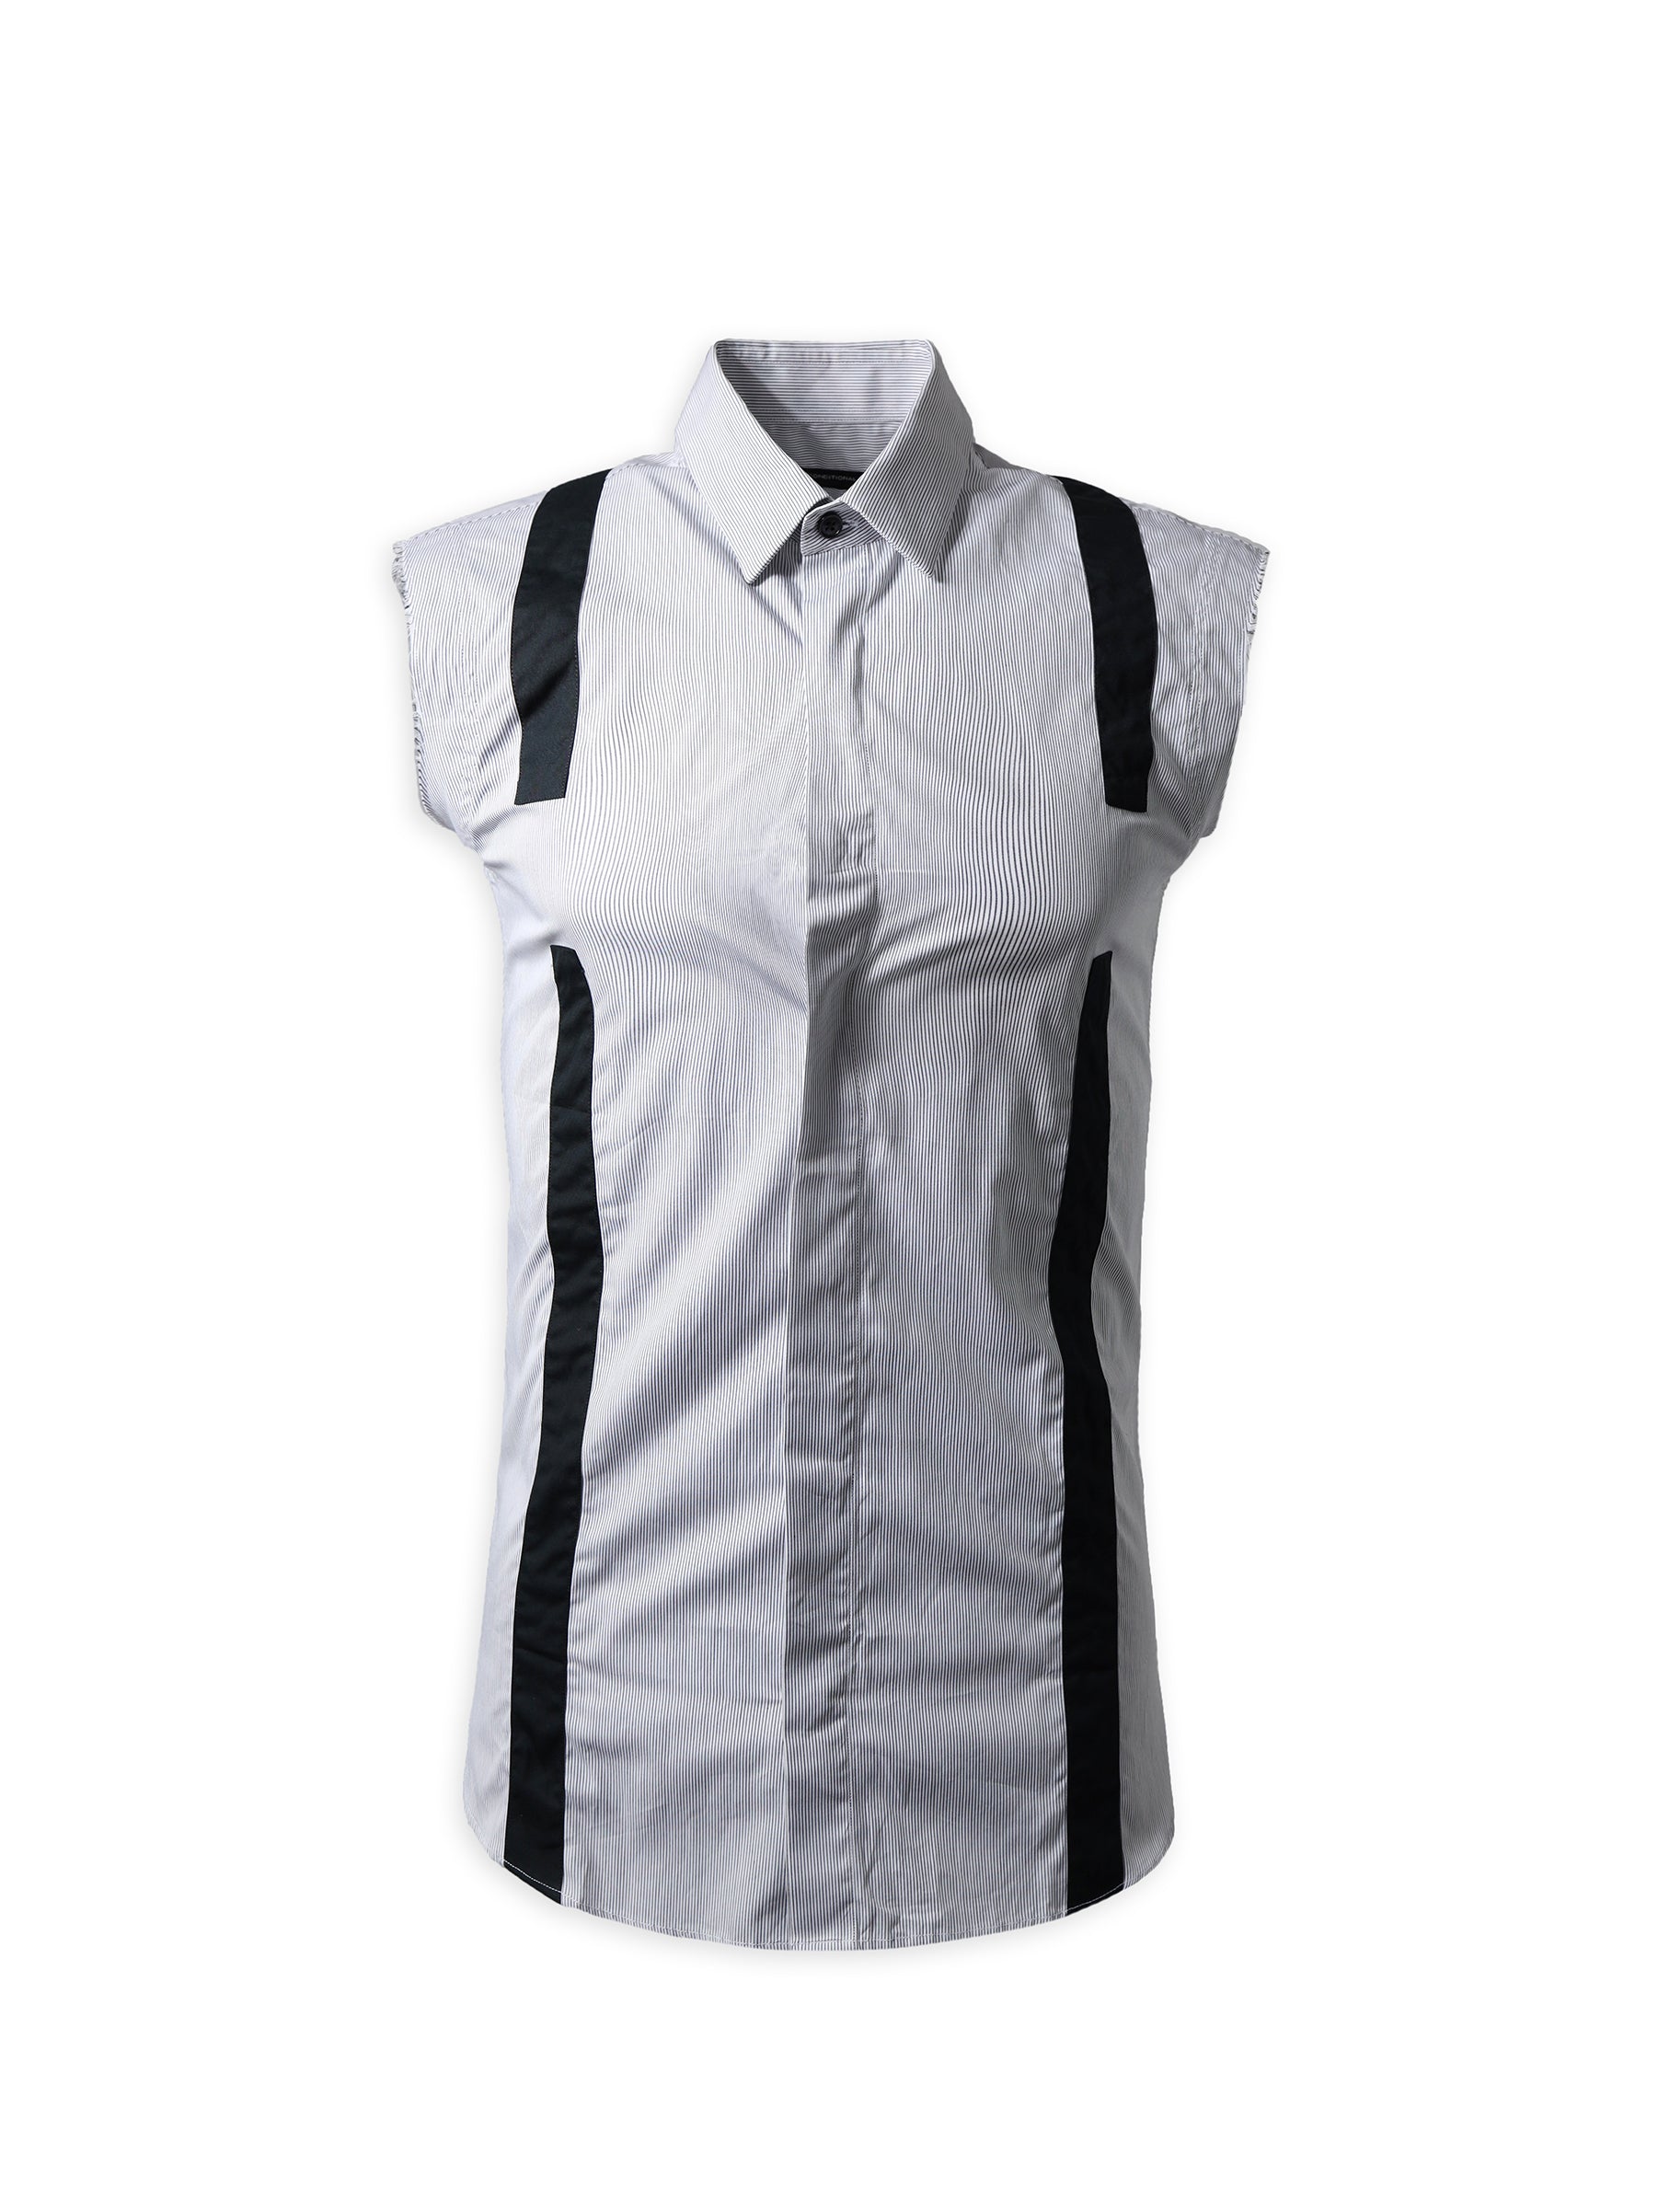 Black And White Stripey Sleeveless Shirt